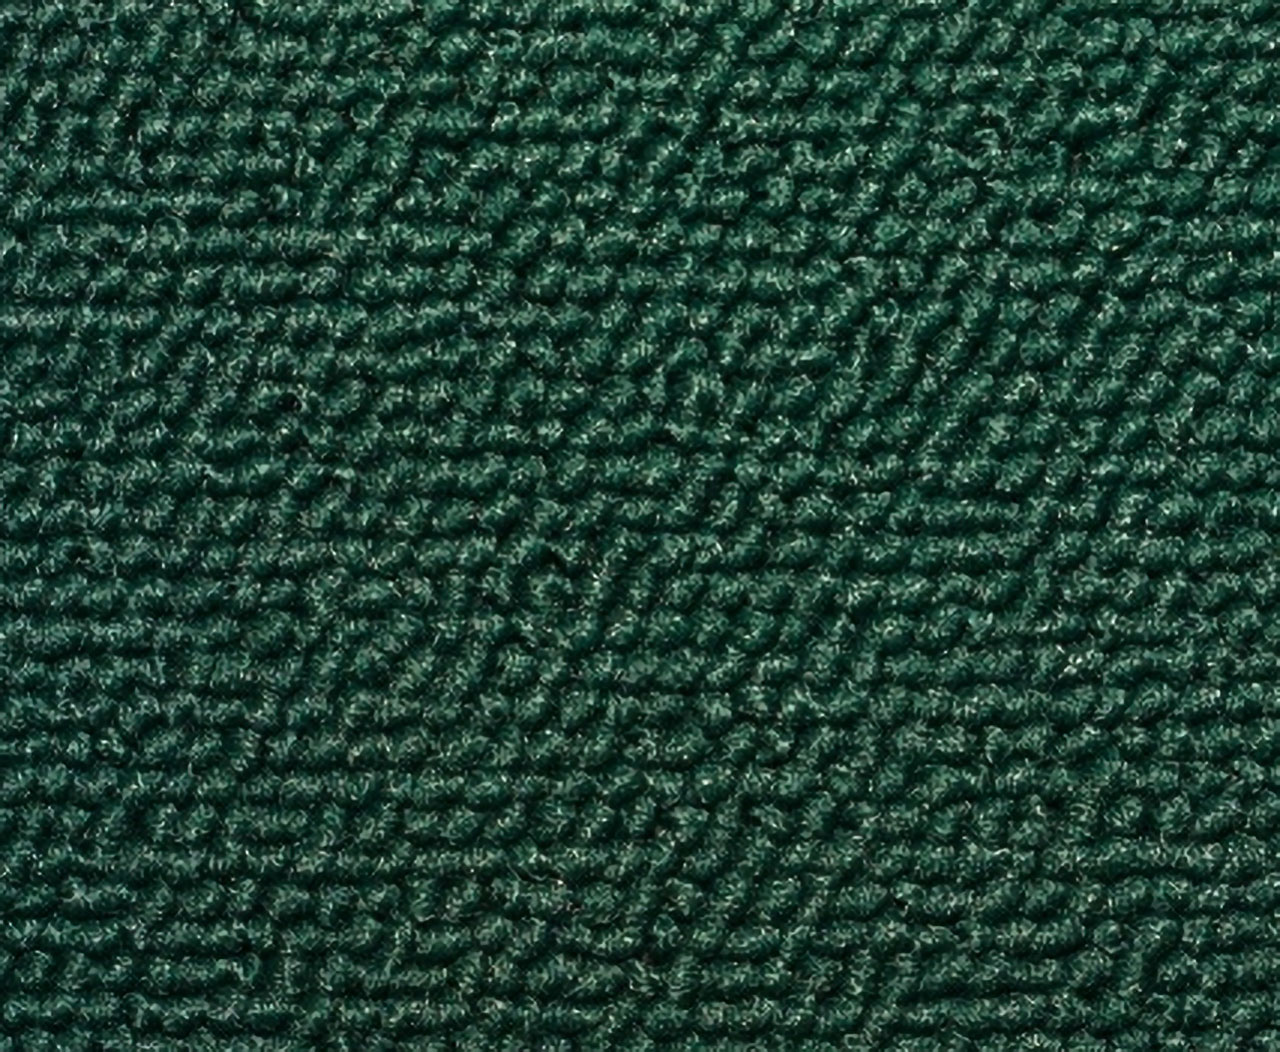 Holden Standard HD Standard Sedan D41 Ballet Green Carpet (Image 1 of 1)